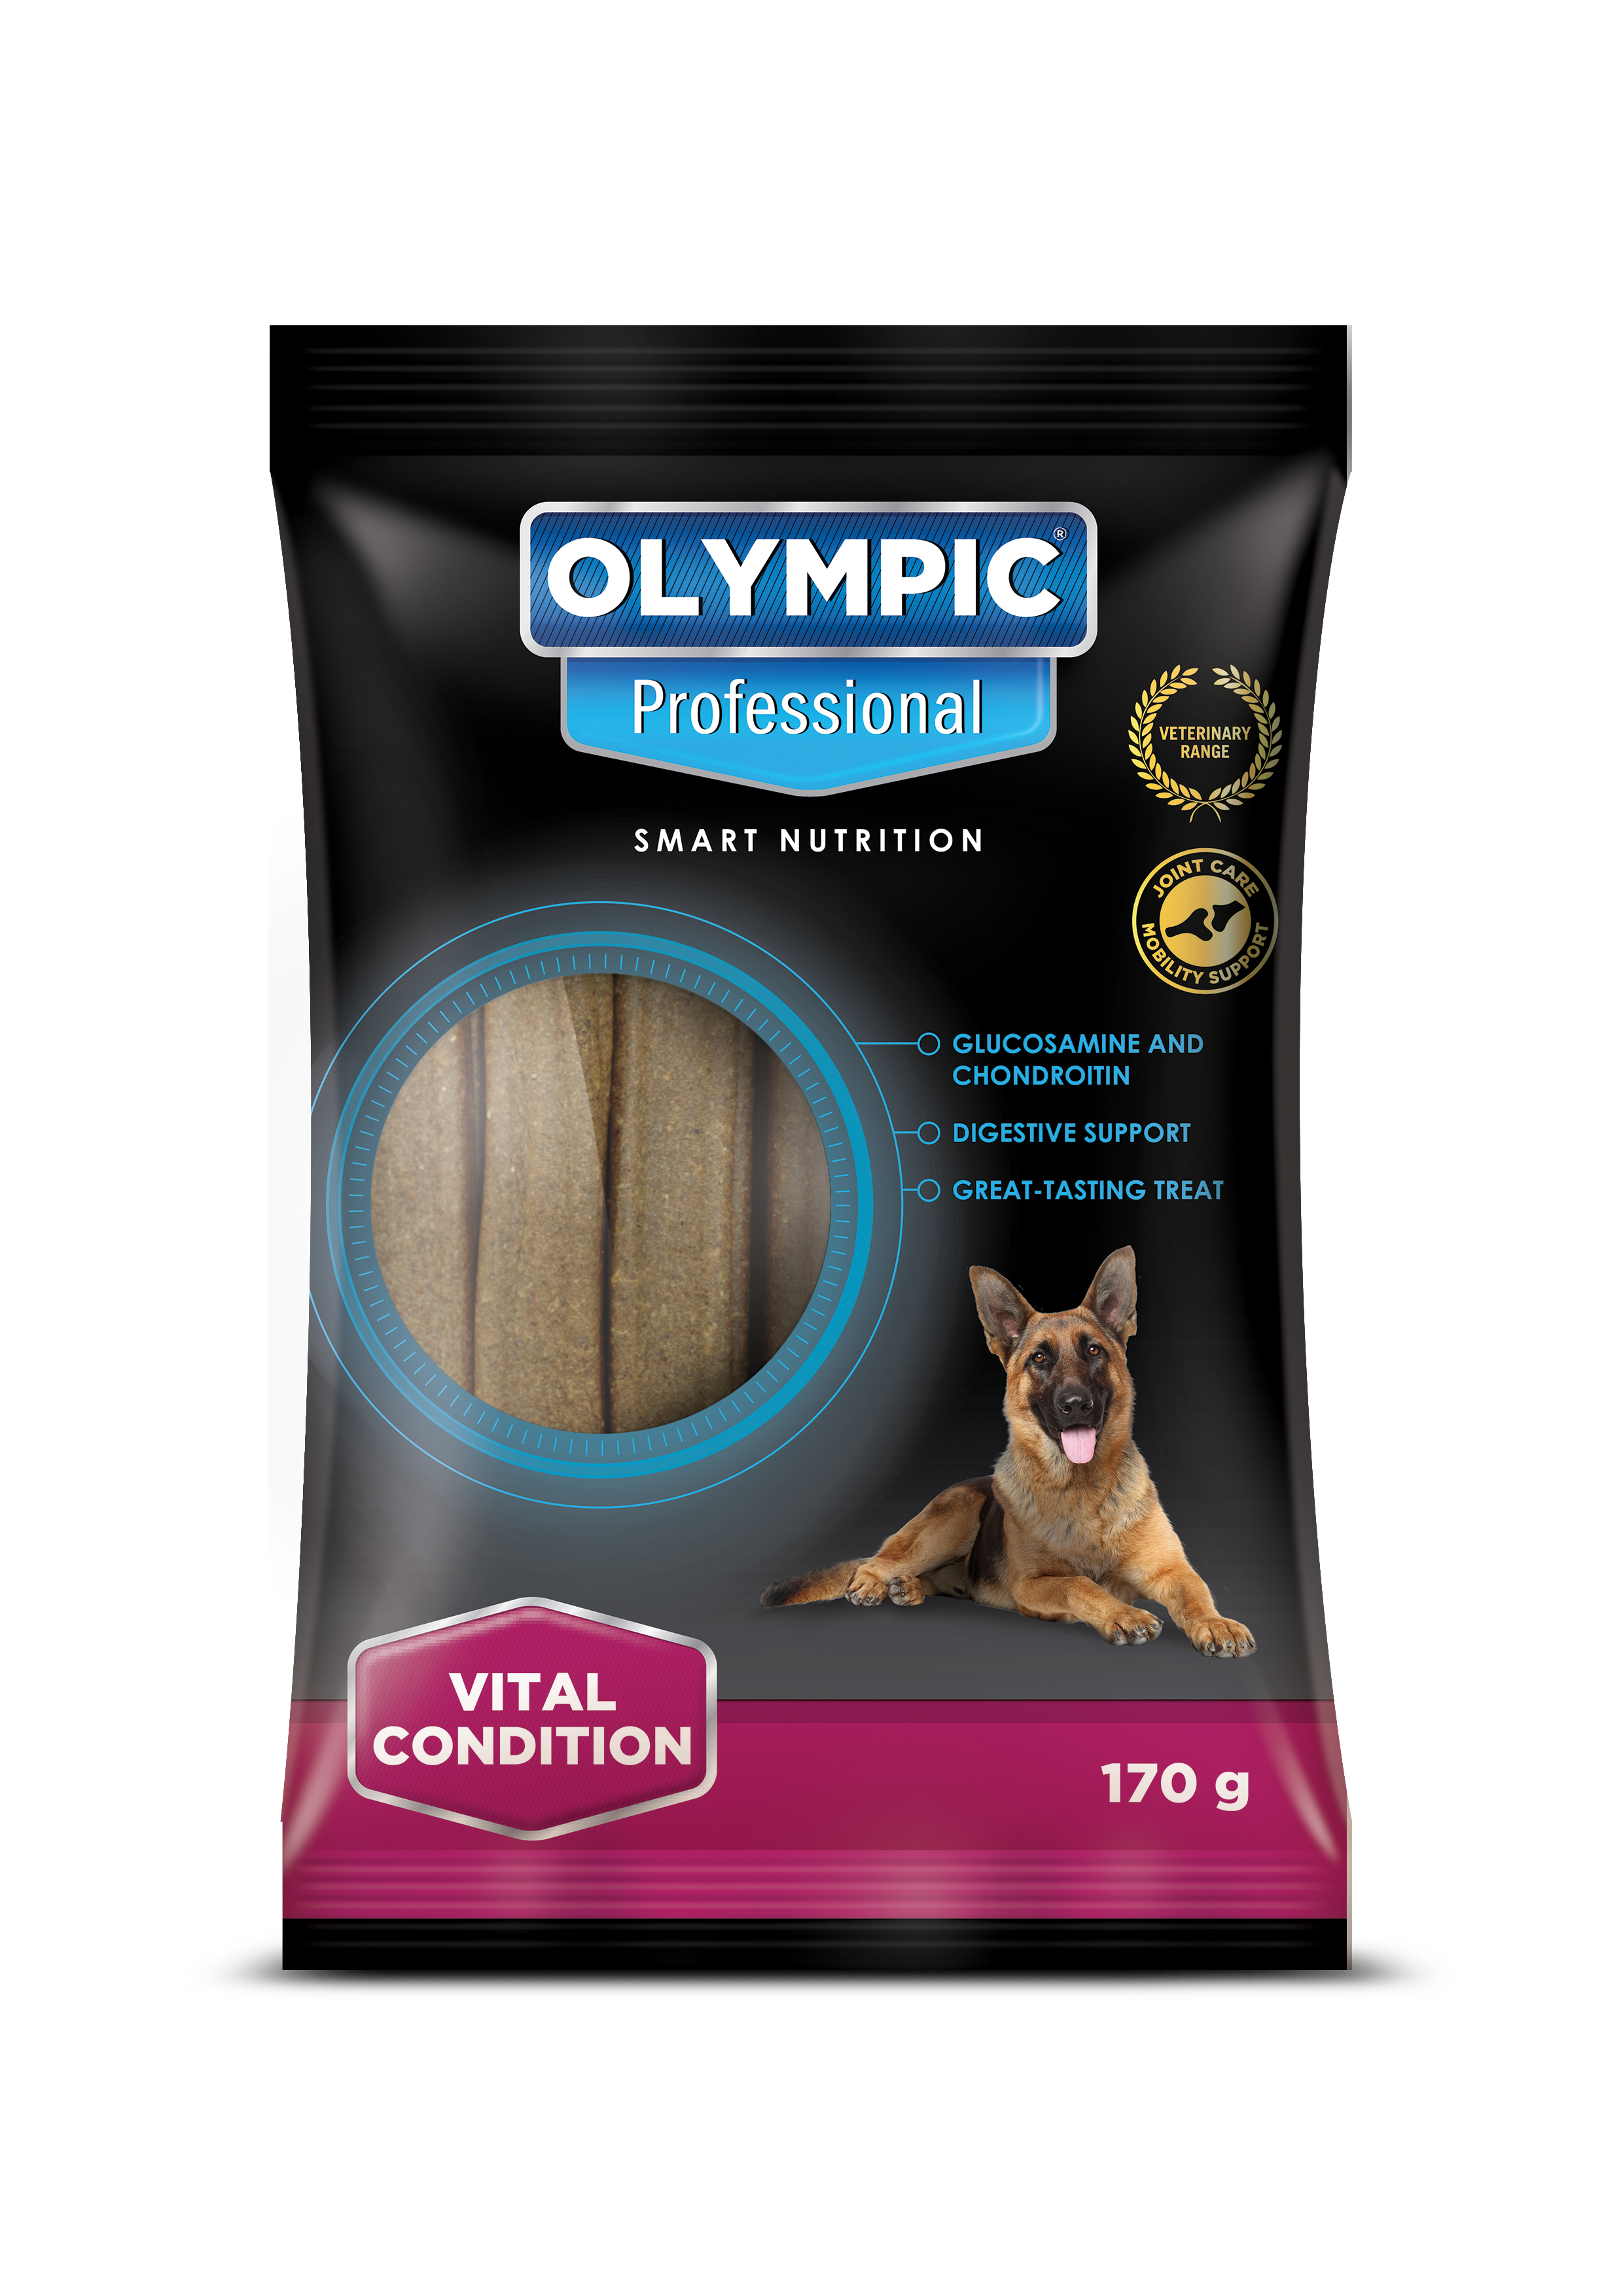 olympic-vital-conditioning-treats